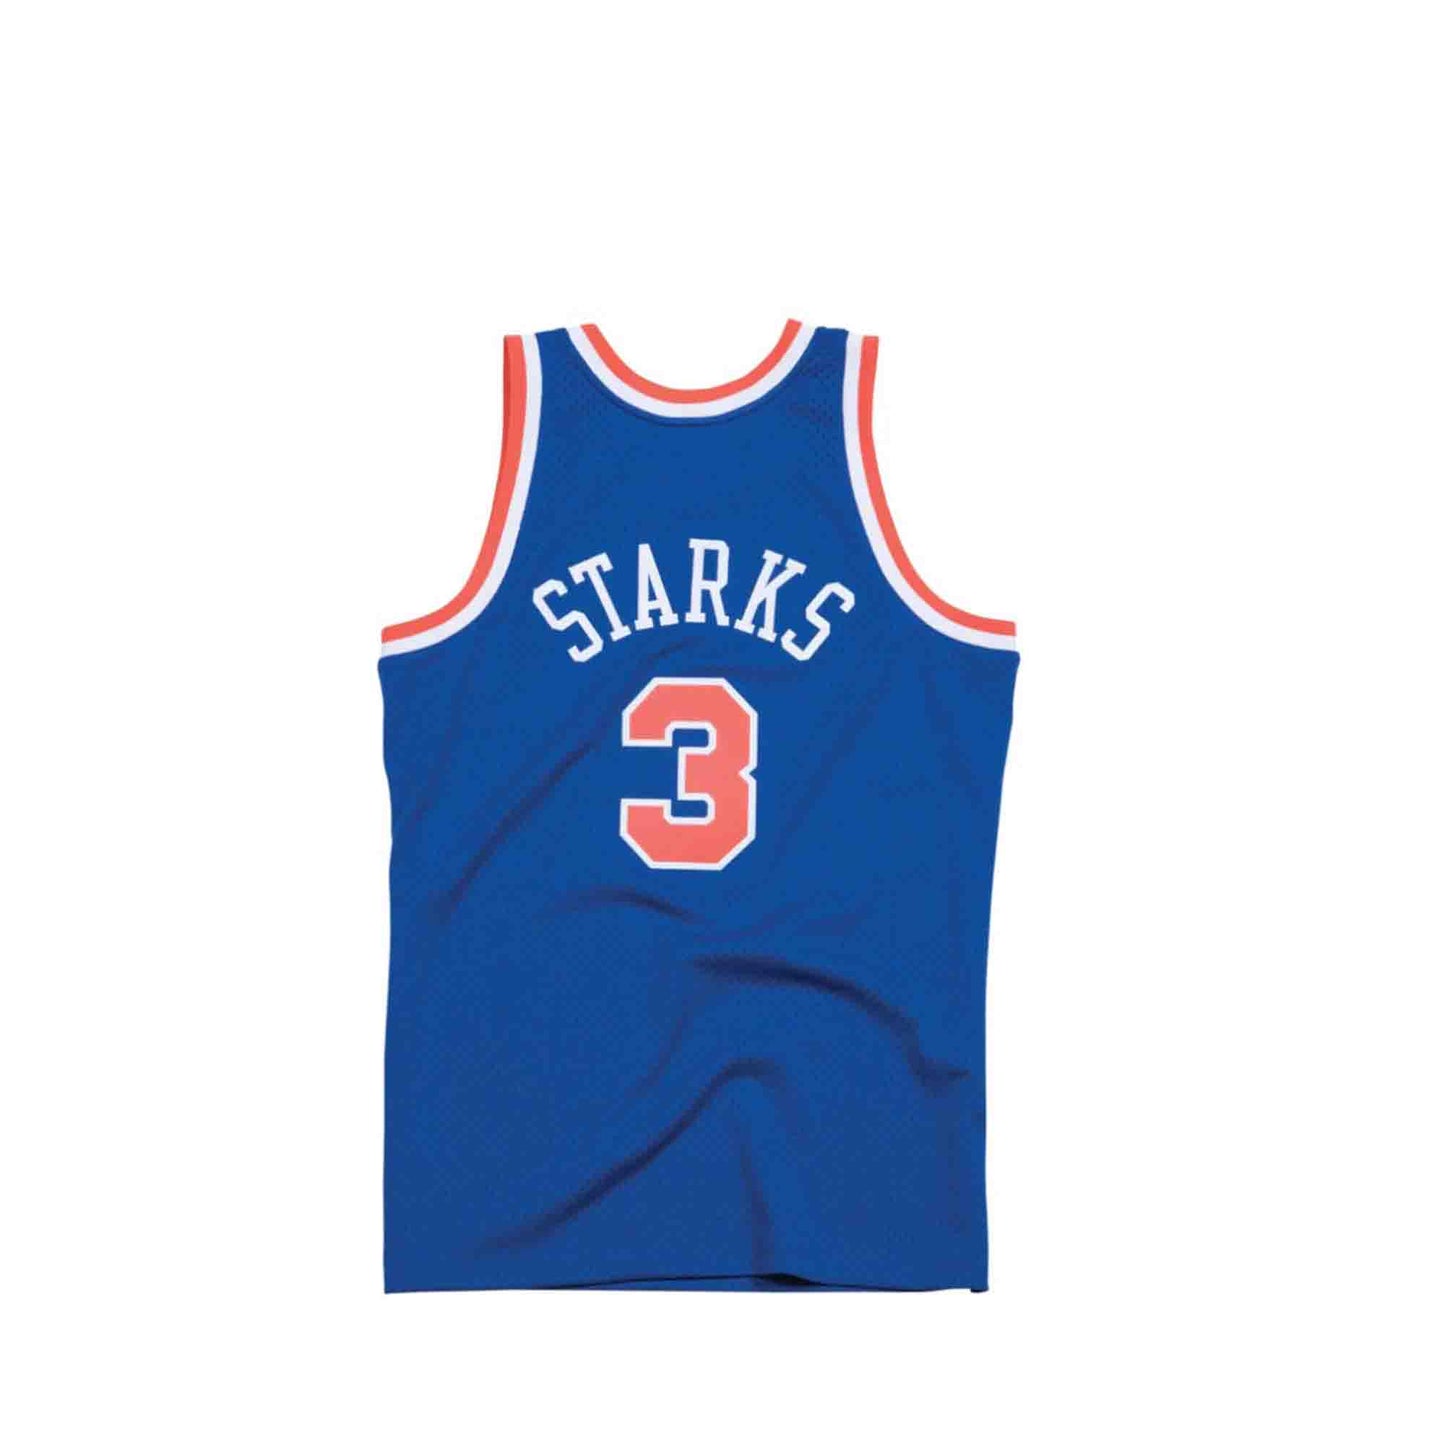 NBA Swingman Jersey New York Knicks 1991-92 John Starks #3